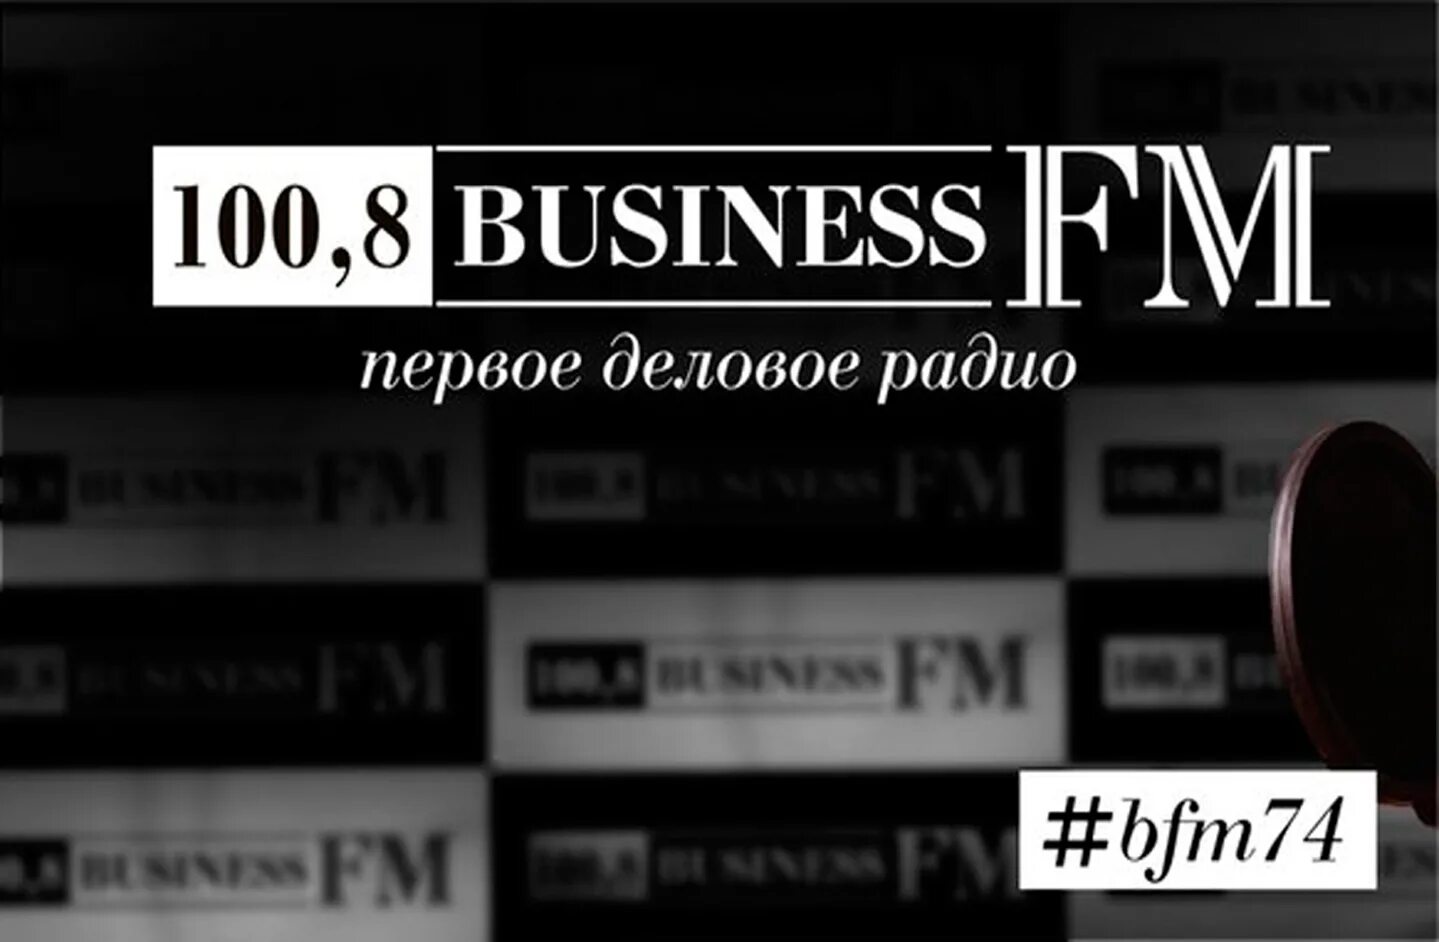 Радио бизнес фм прямой эфир. Бизнес ФМ. Бизнес радио. Радиостанция бизнес ФМ. Бизнес ФМ логотип.